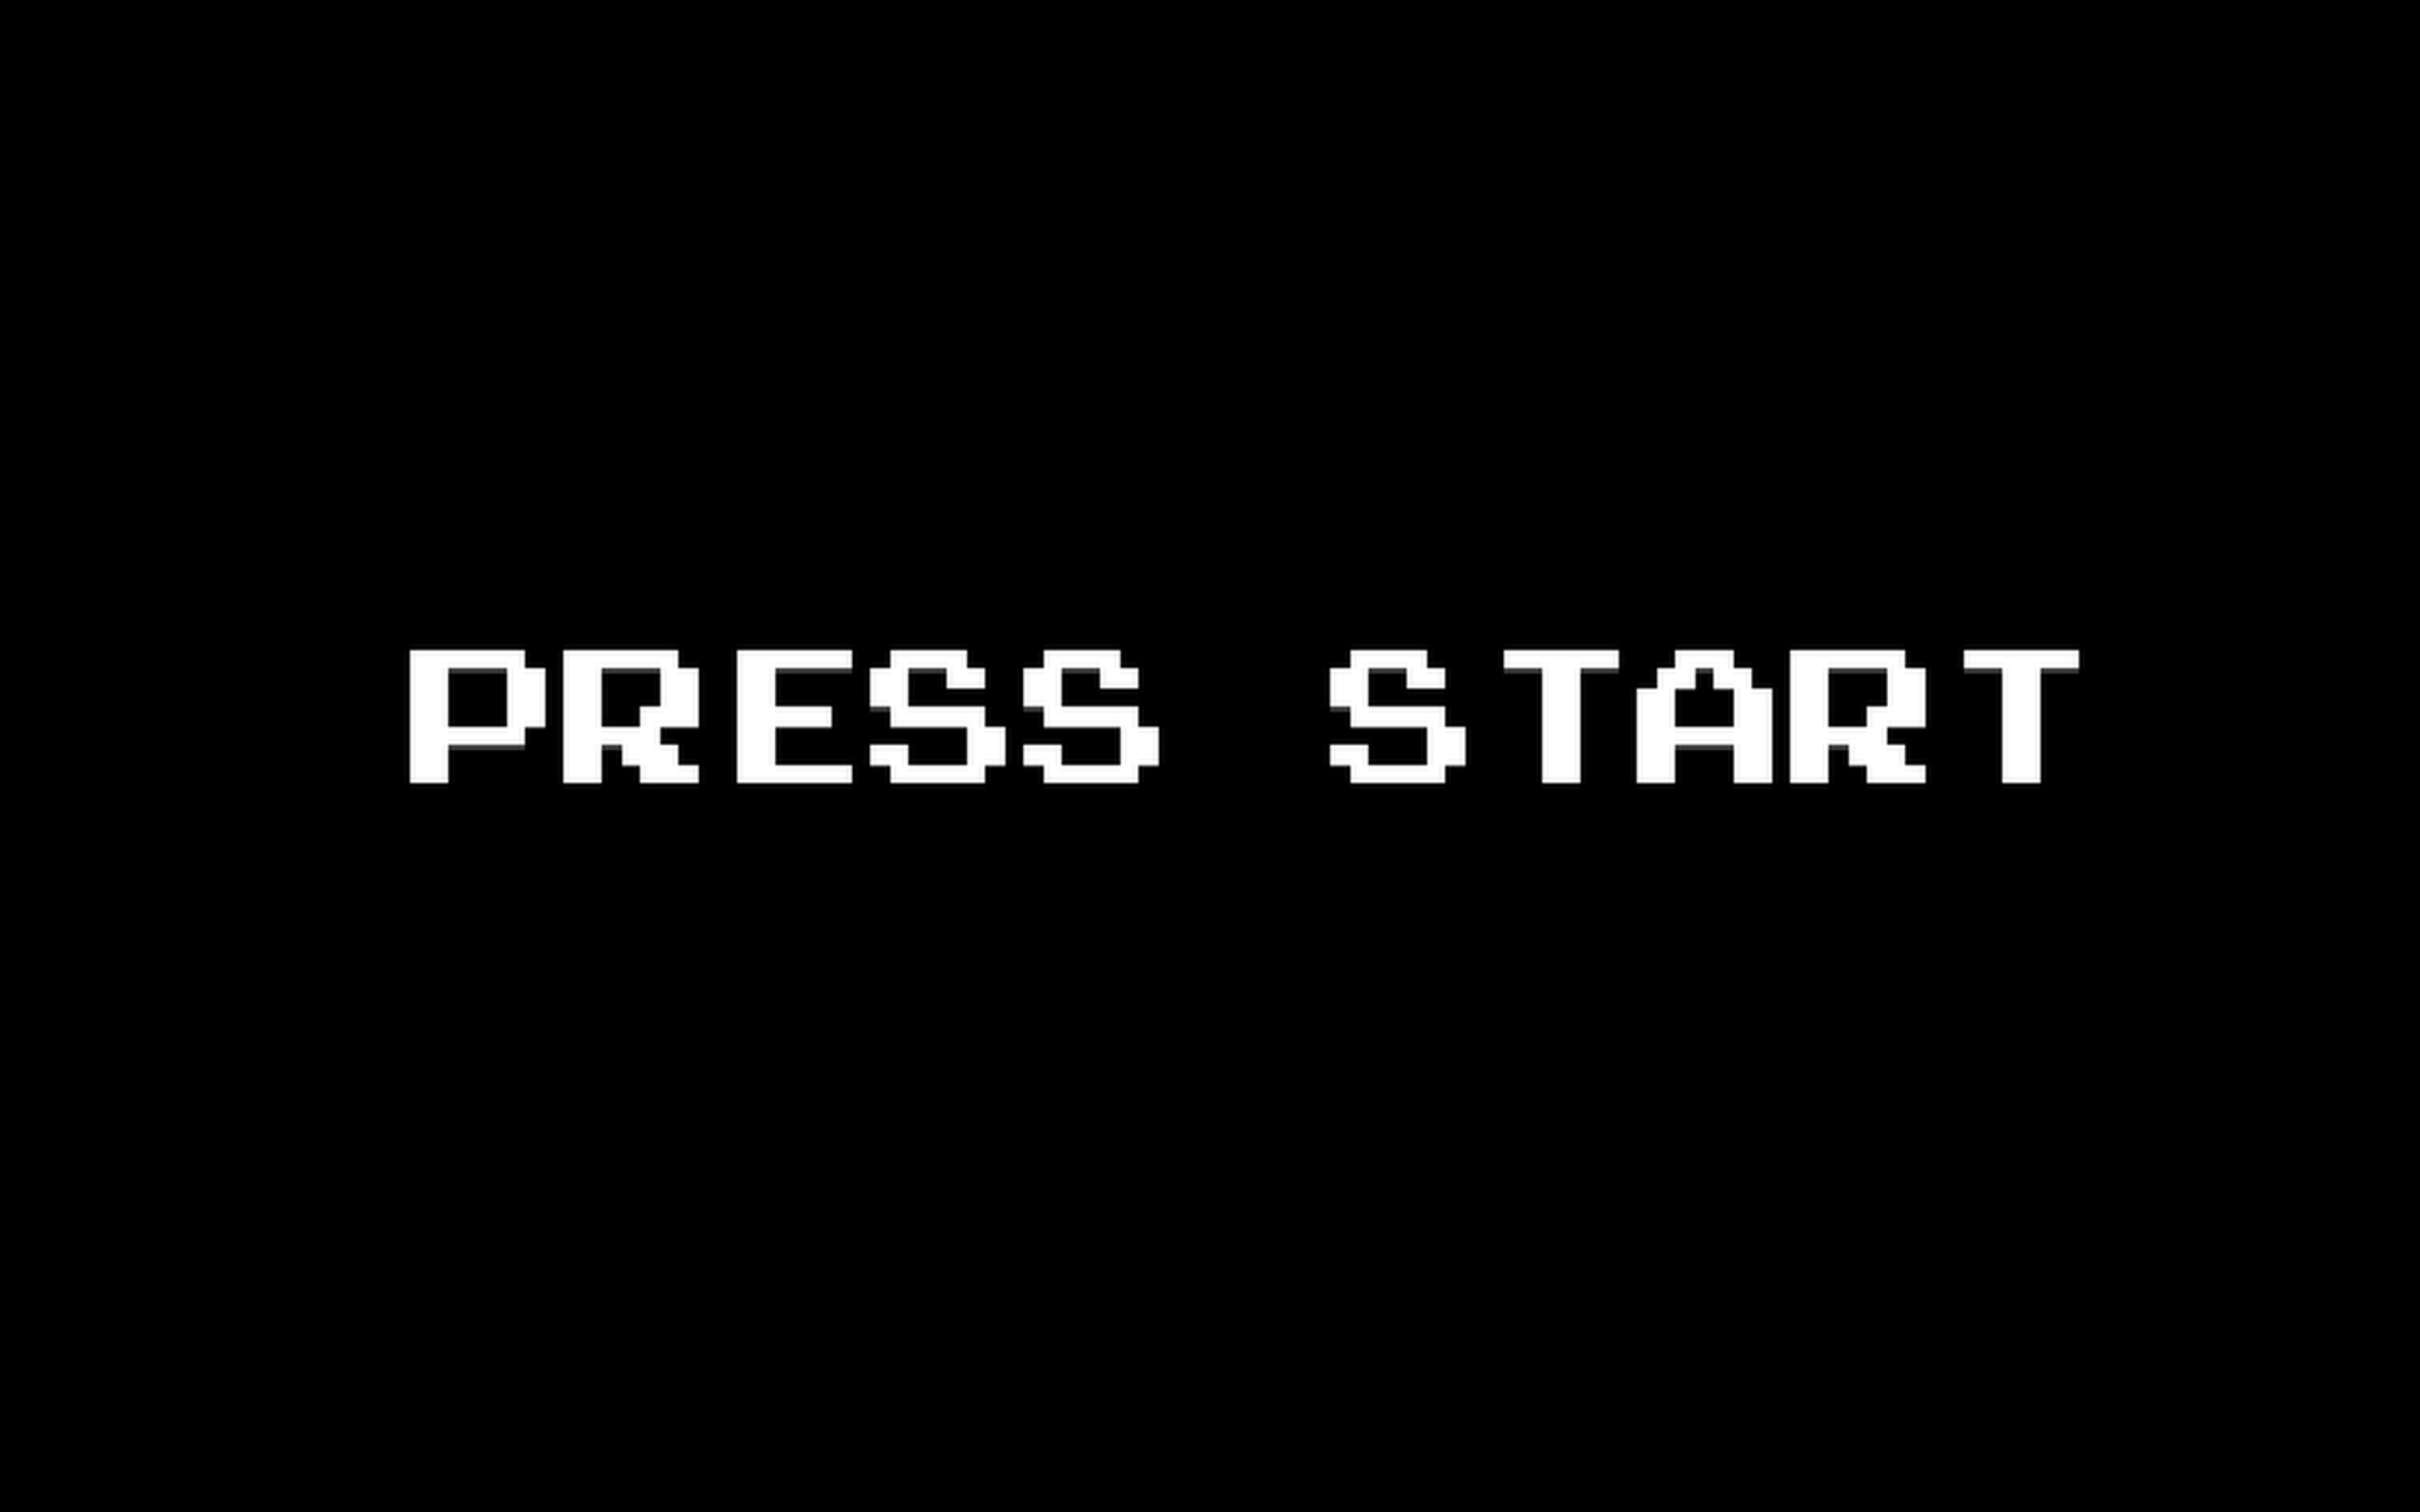 Start game. Press start. Надпись Press start. Надпись start на черном фоне. Новая игра надпись.